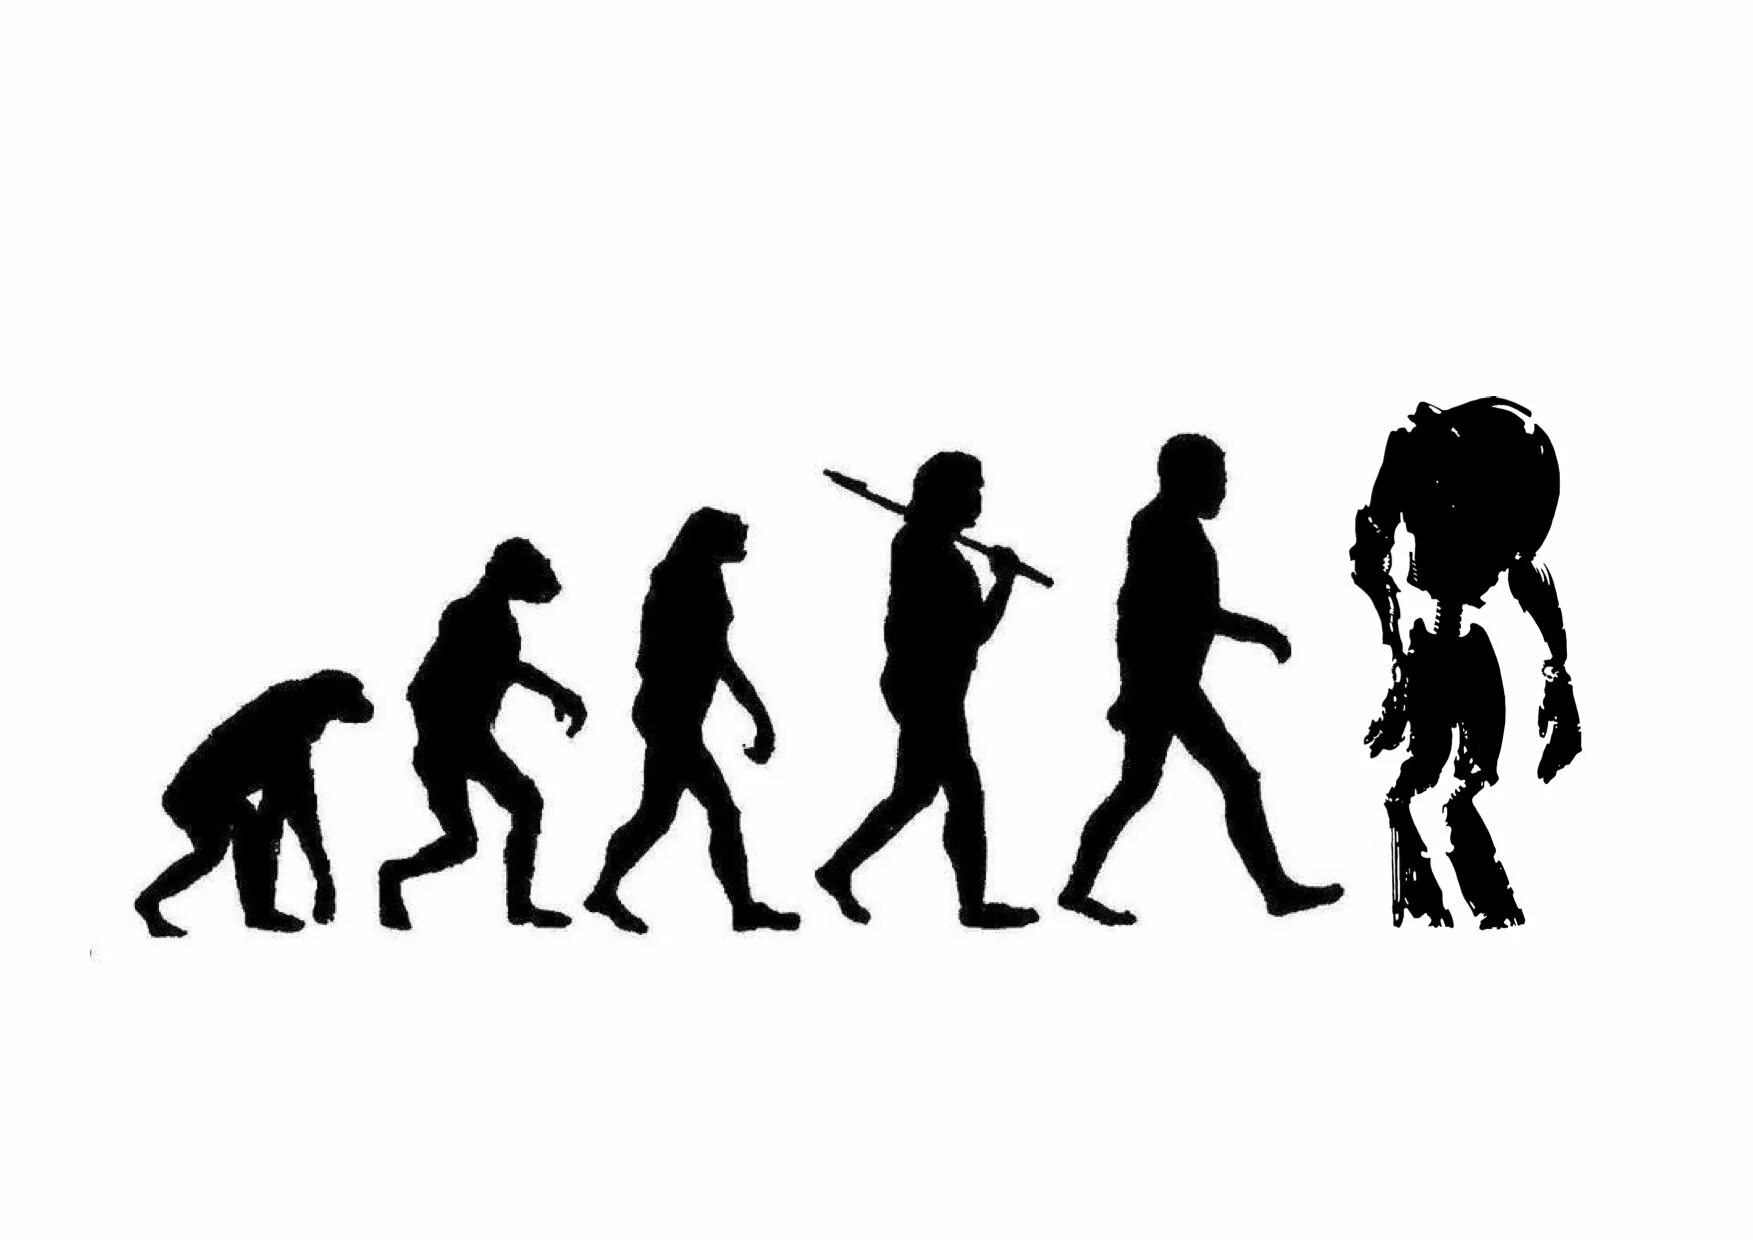 Эволюция. Эволюция человека. Эволюция рисунок без фона. Развитие человека. Эволюция видна